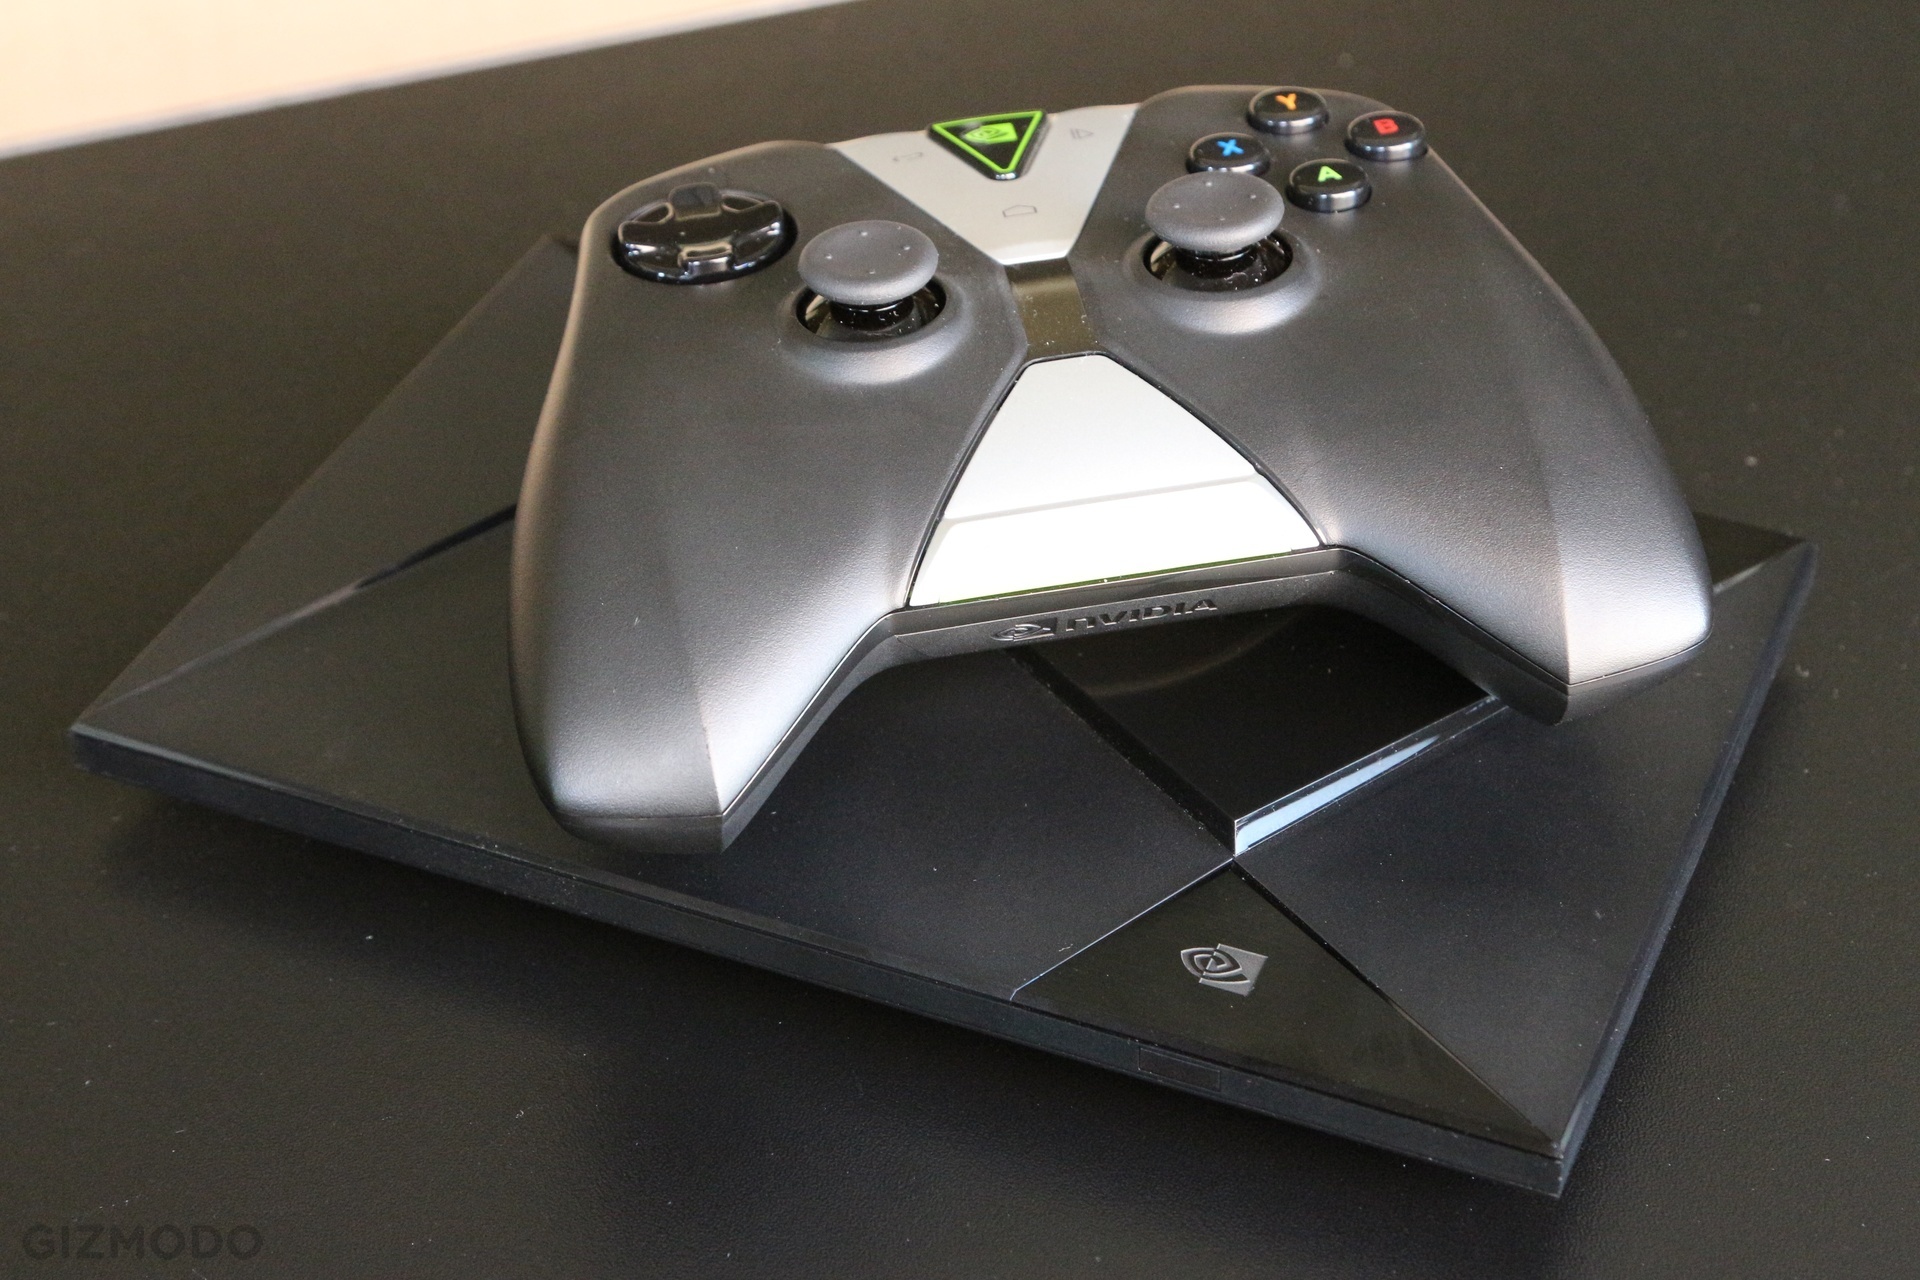 Nvidia Shield Console Hands-On: Yep, That’s One Sleek Set Top Box